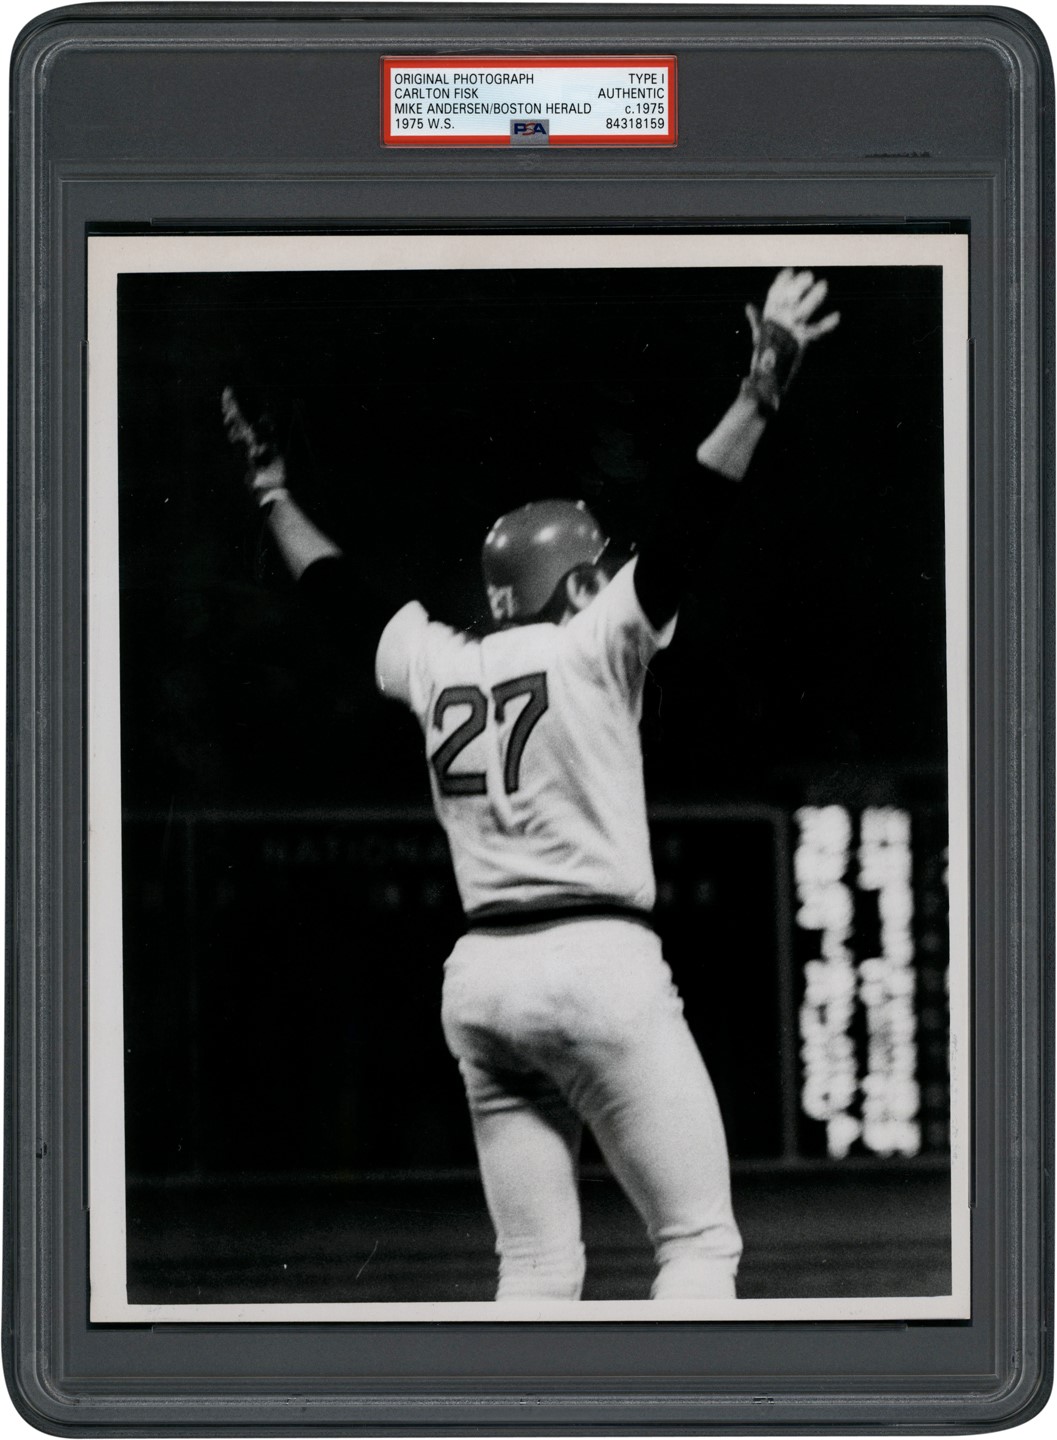 - 1975 Carlton Fisk World Series Game 6 Home Run Photograph (PSA Type I)